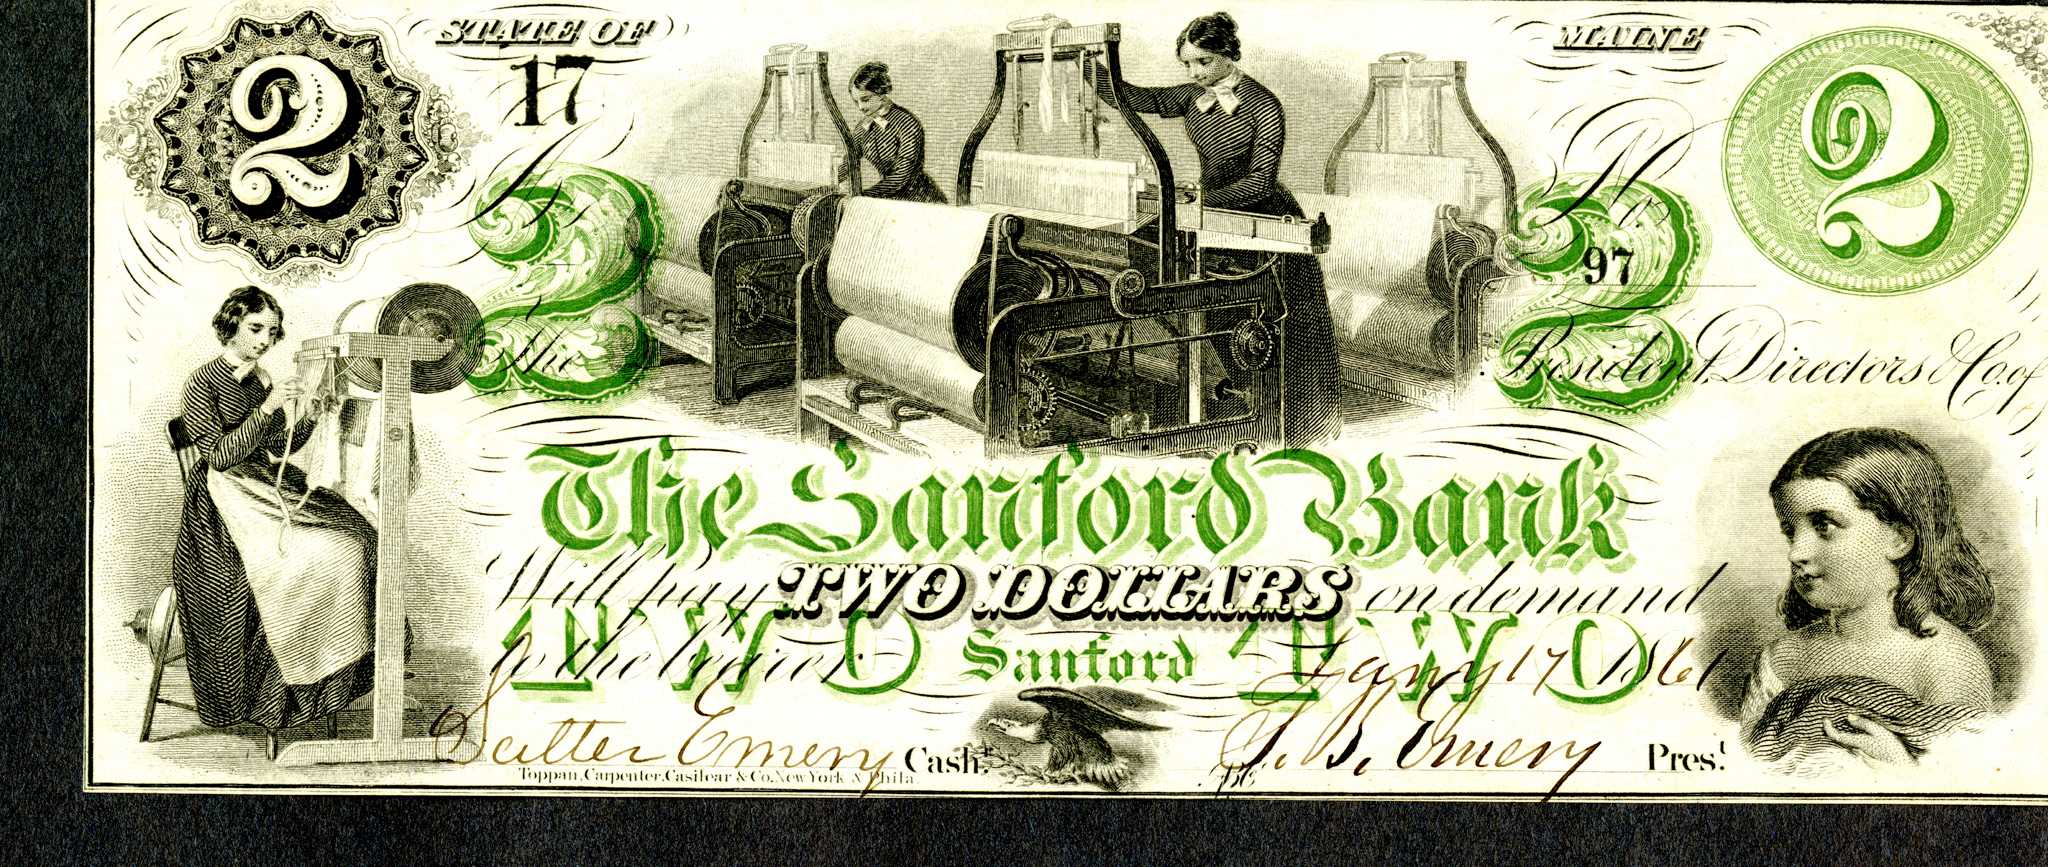 image of Sanford Bank note